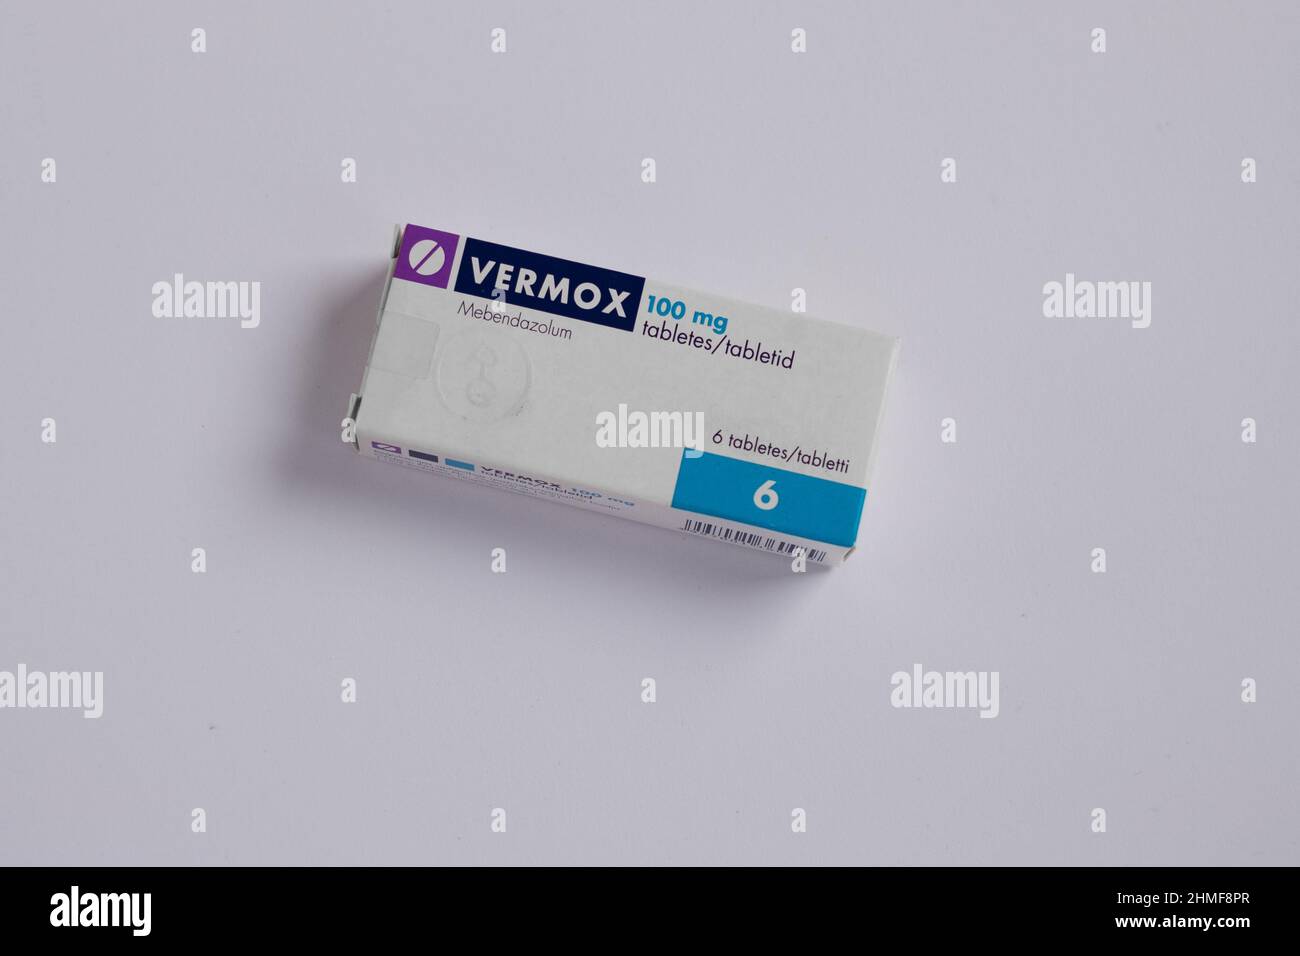 Tallinn, Estonia - 02.08.2022: Vermox mebendazole tablets by Janssen Pharmaceutica for worm infection treatment. Stock Photo